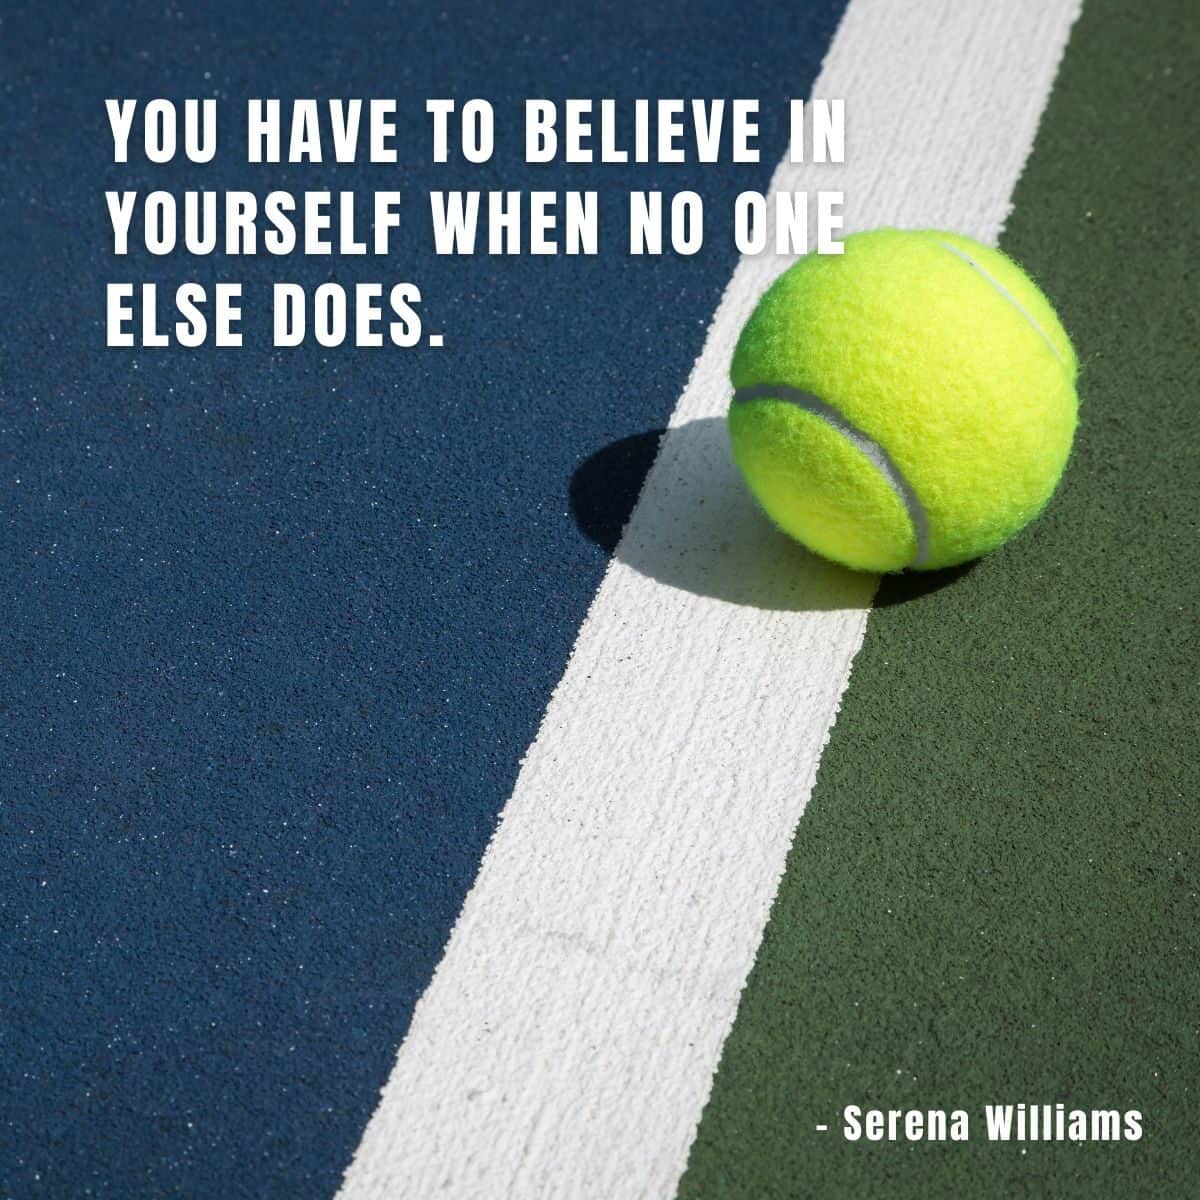 Serena Williams Quote